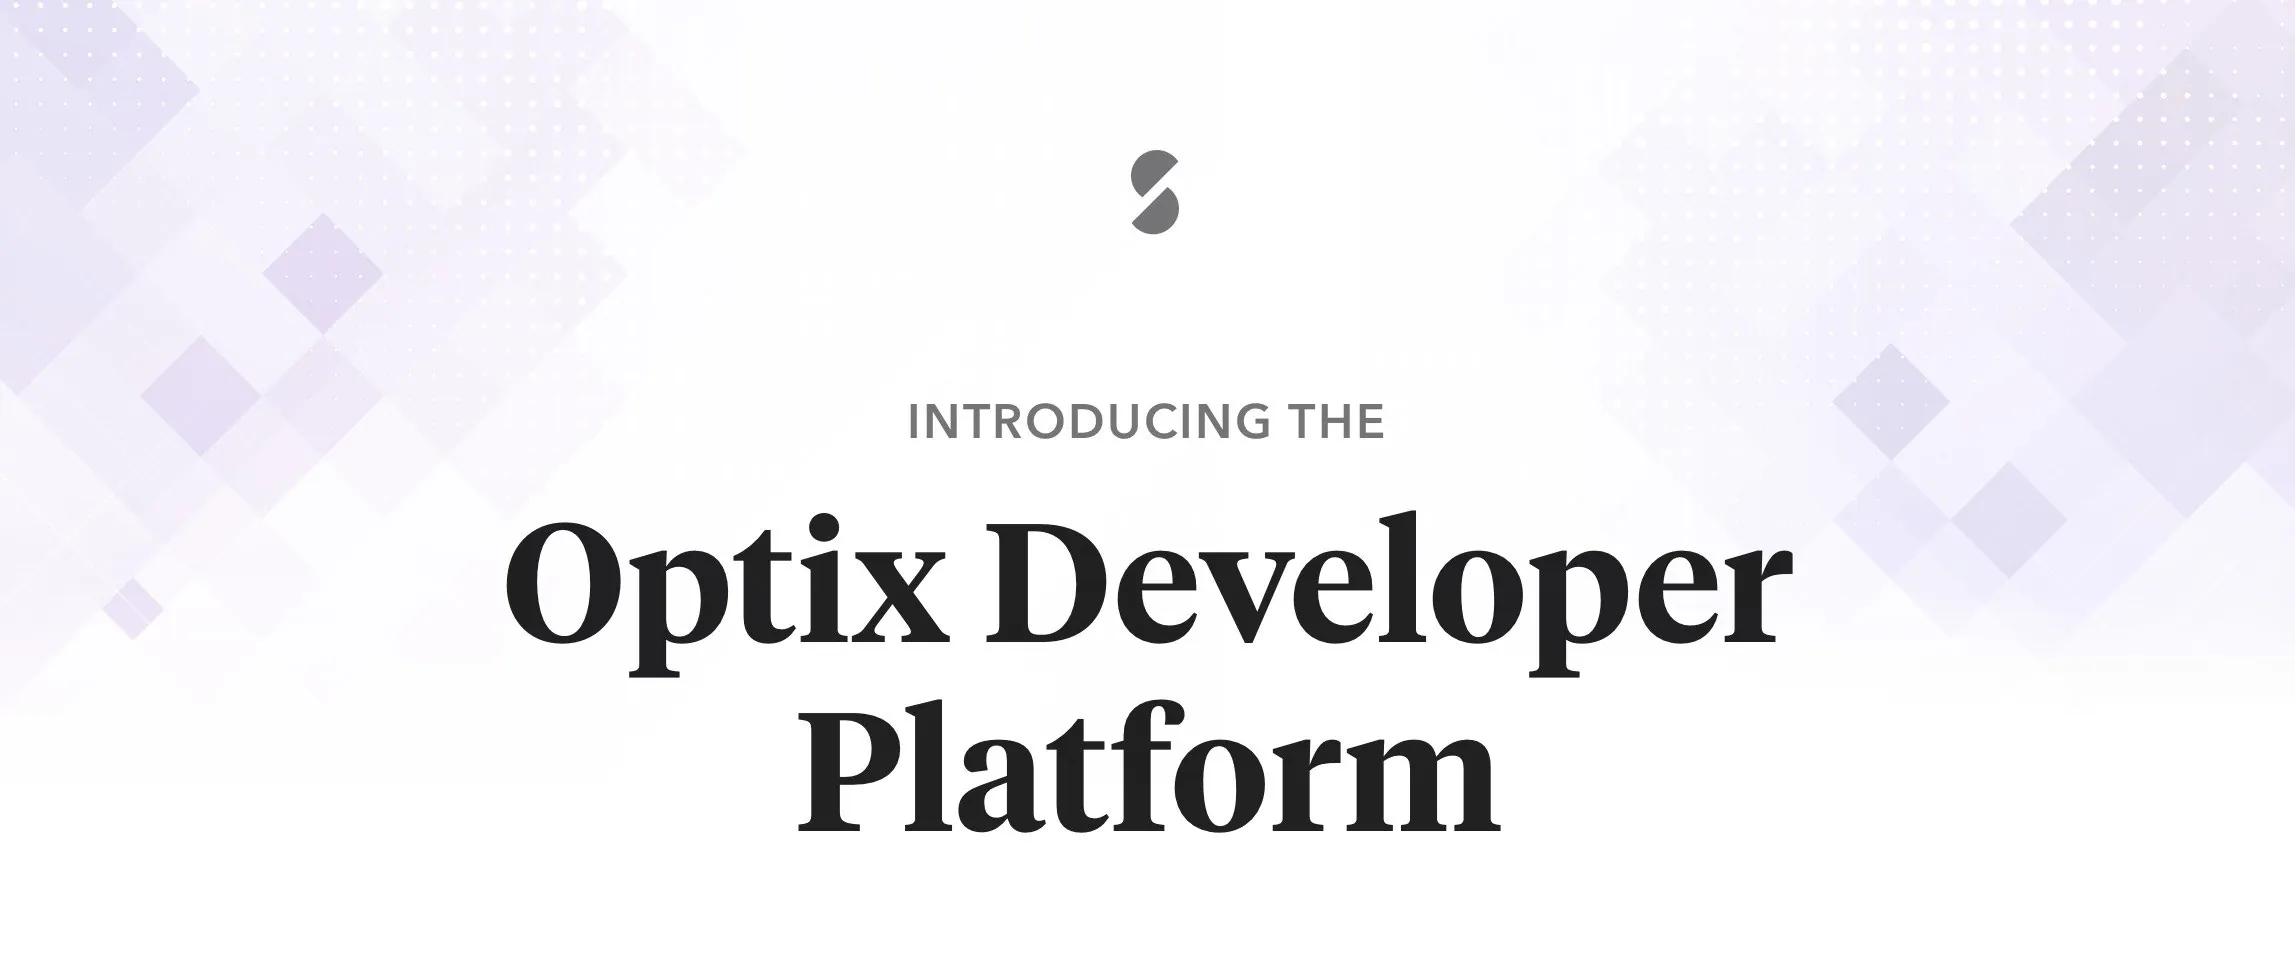 Introducing the Optix developer platform